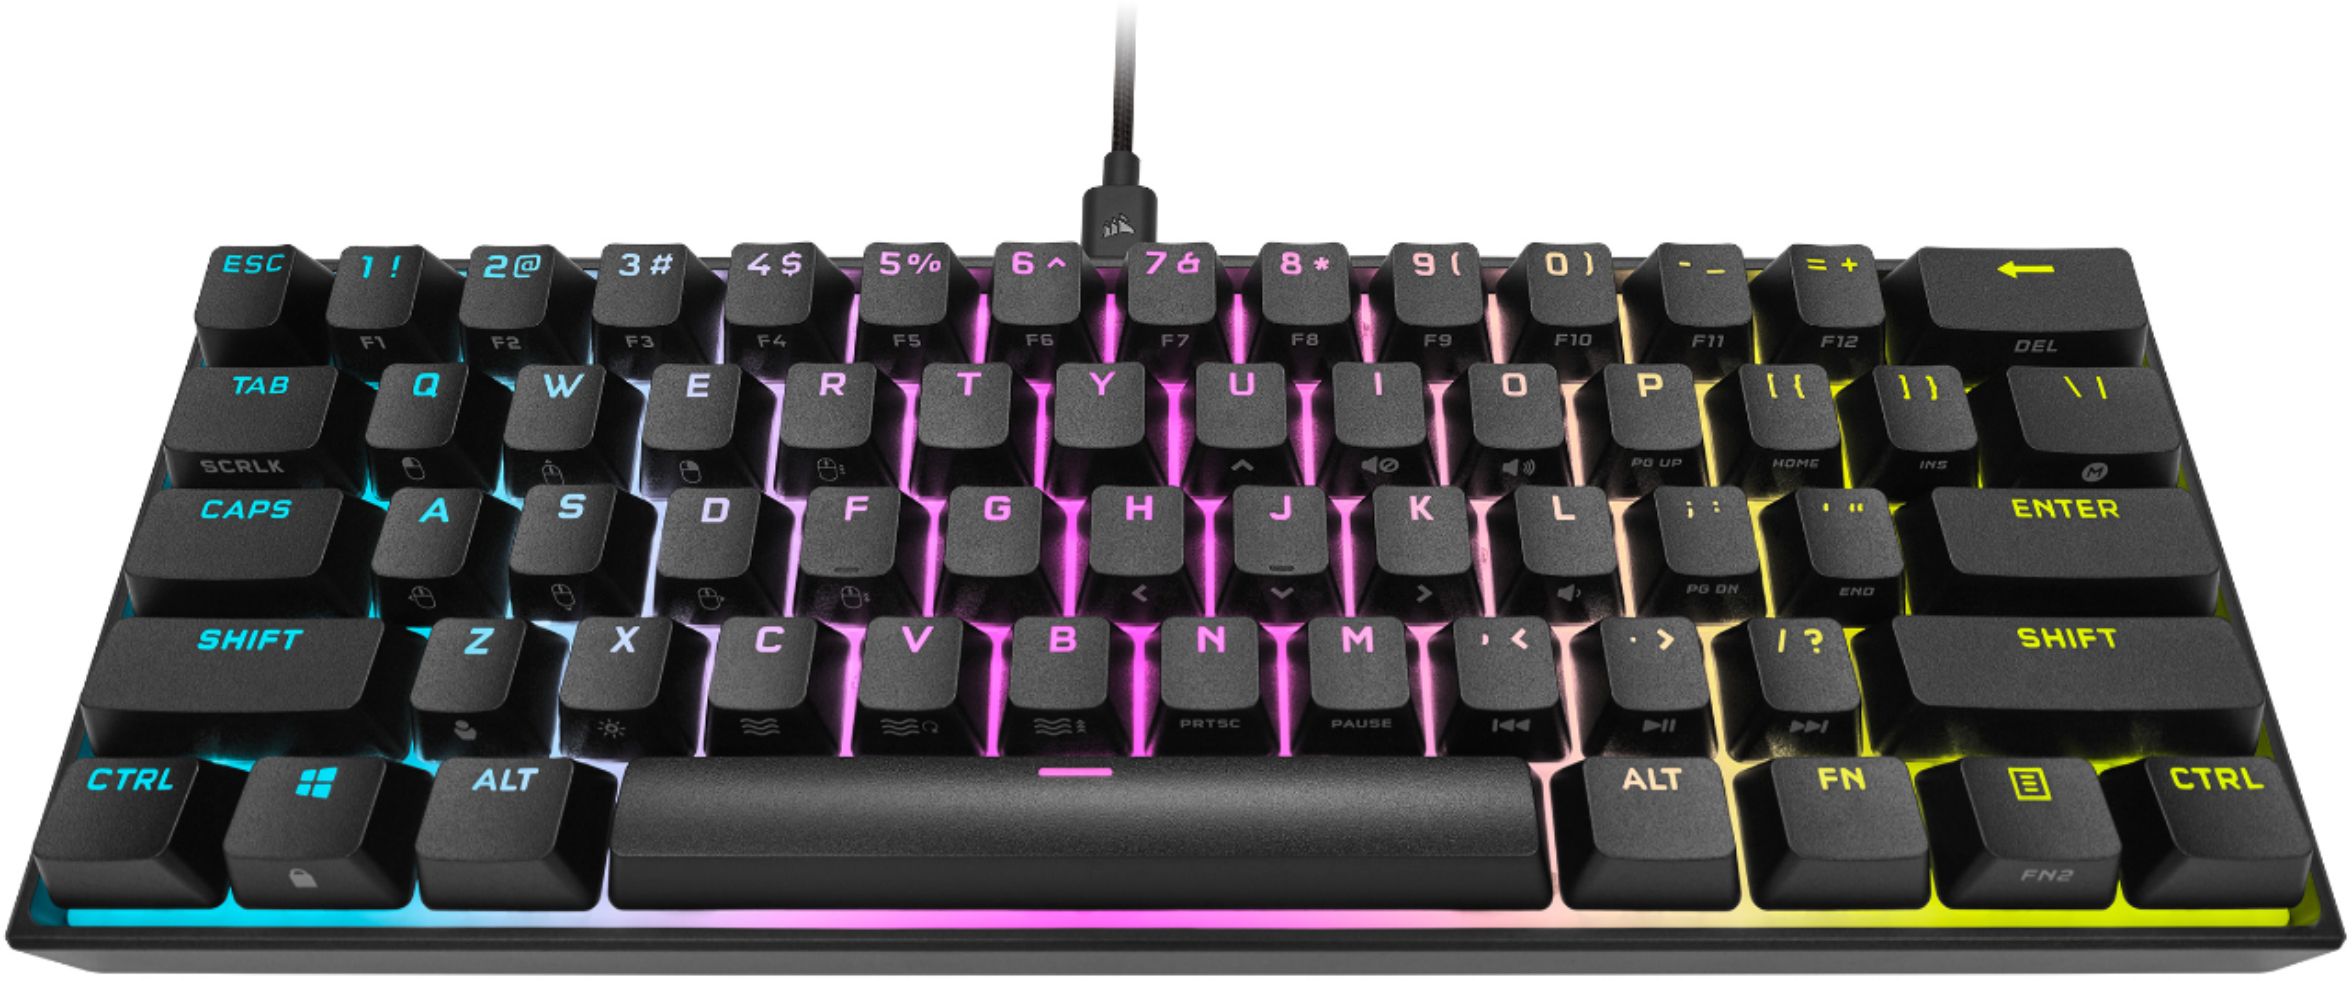 Corsair K65 RGB Mini keyboard review